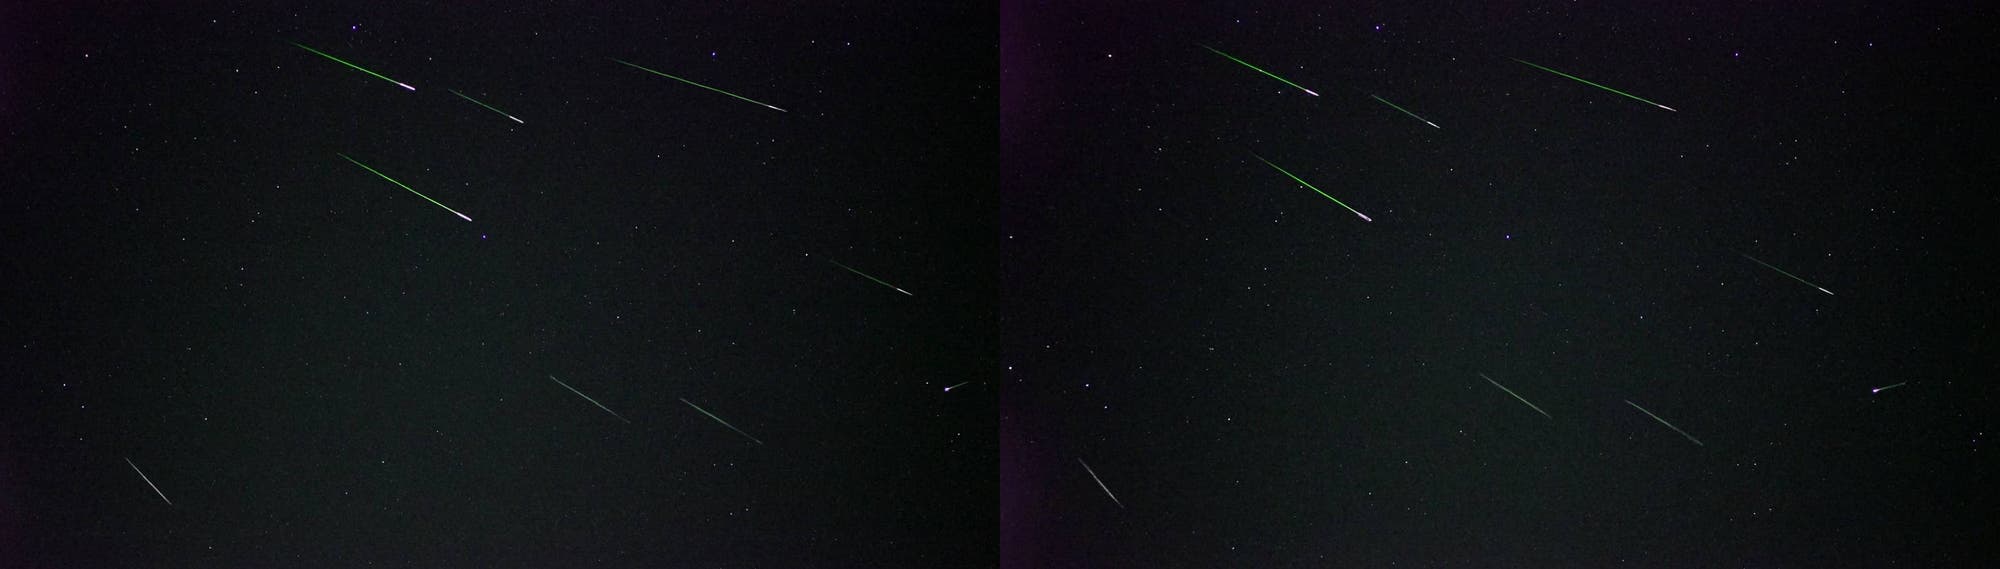 Perseiden-Meteore 2016 in Stereo